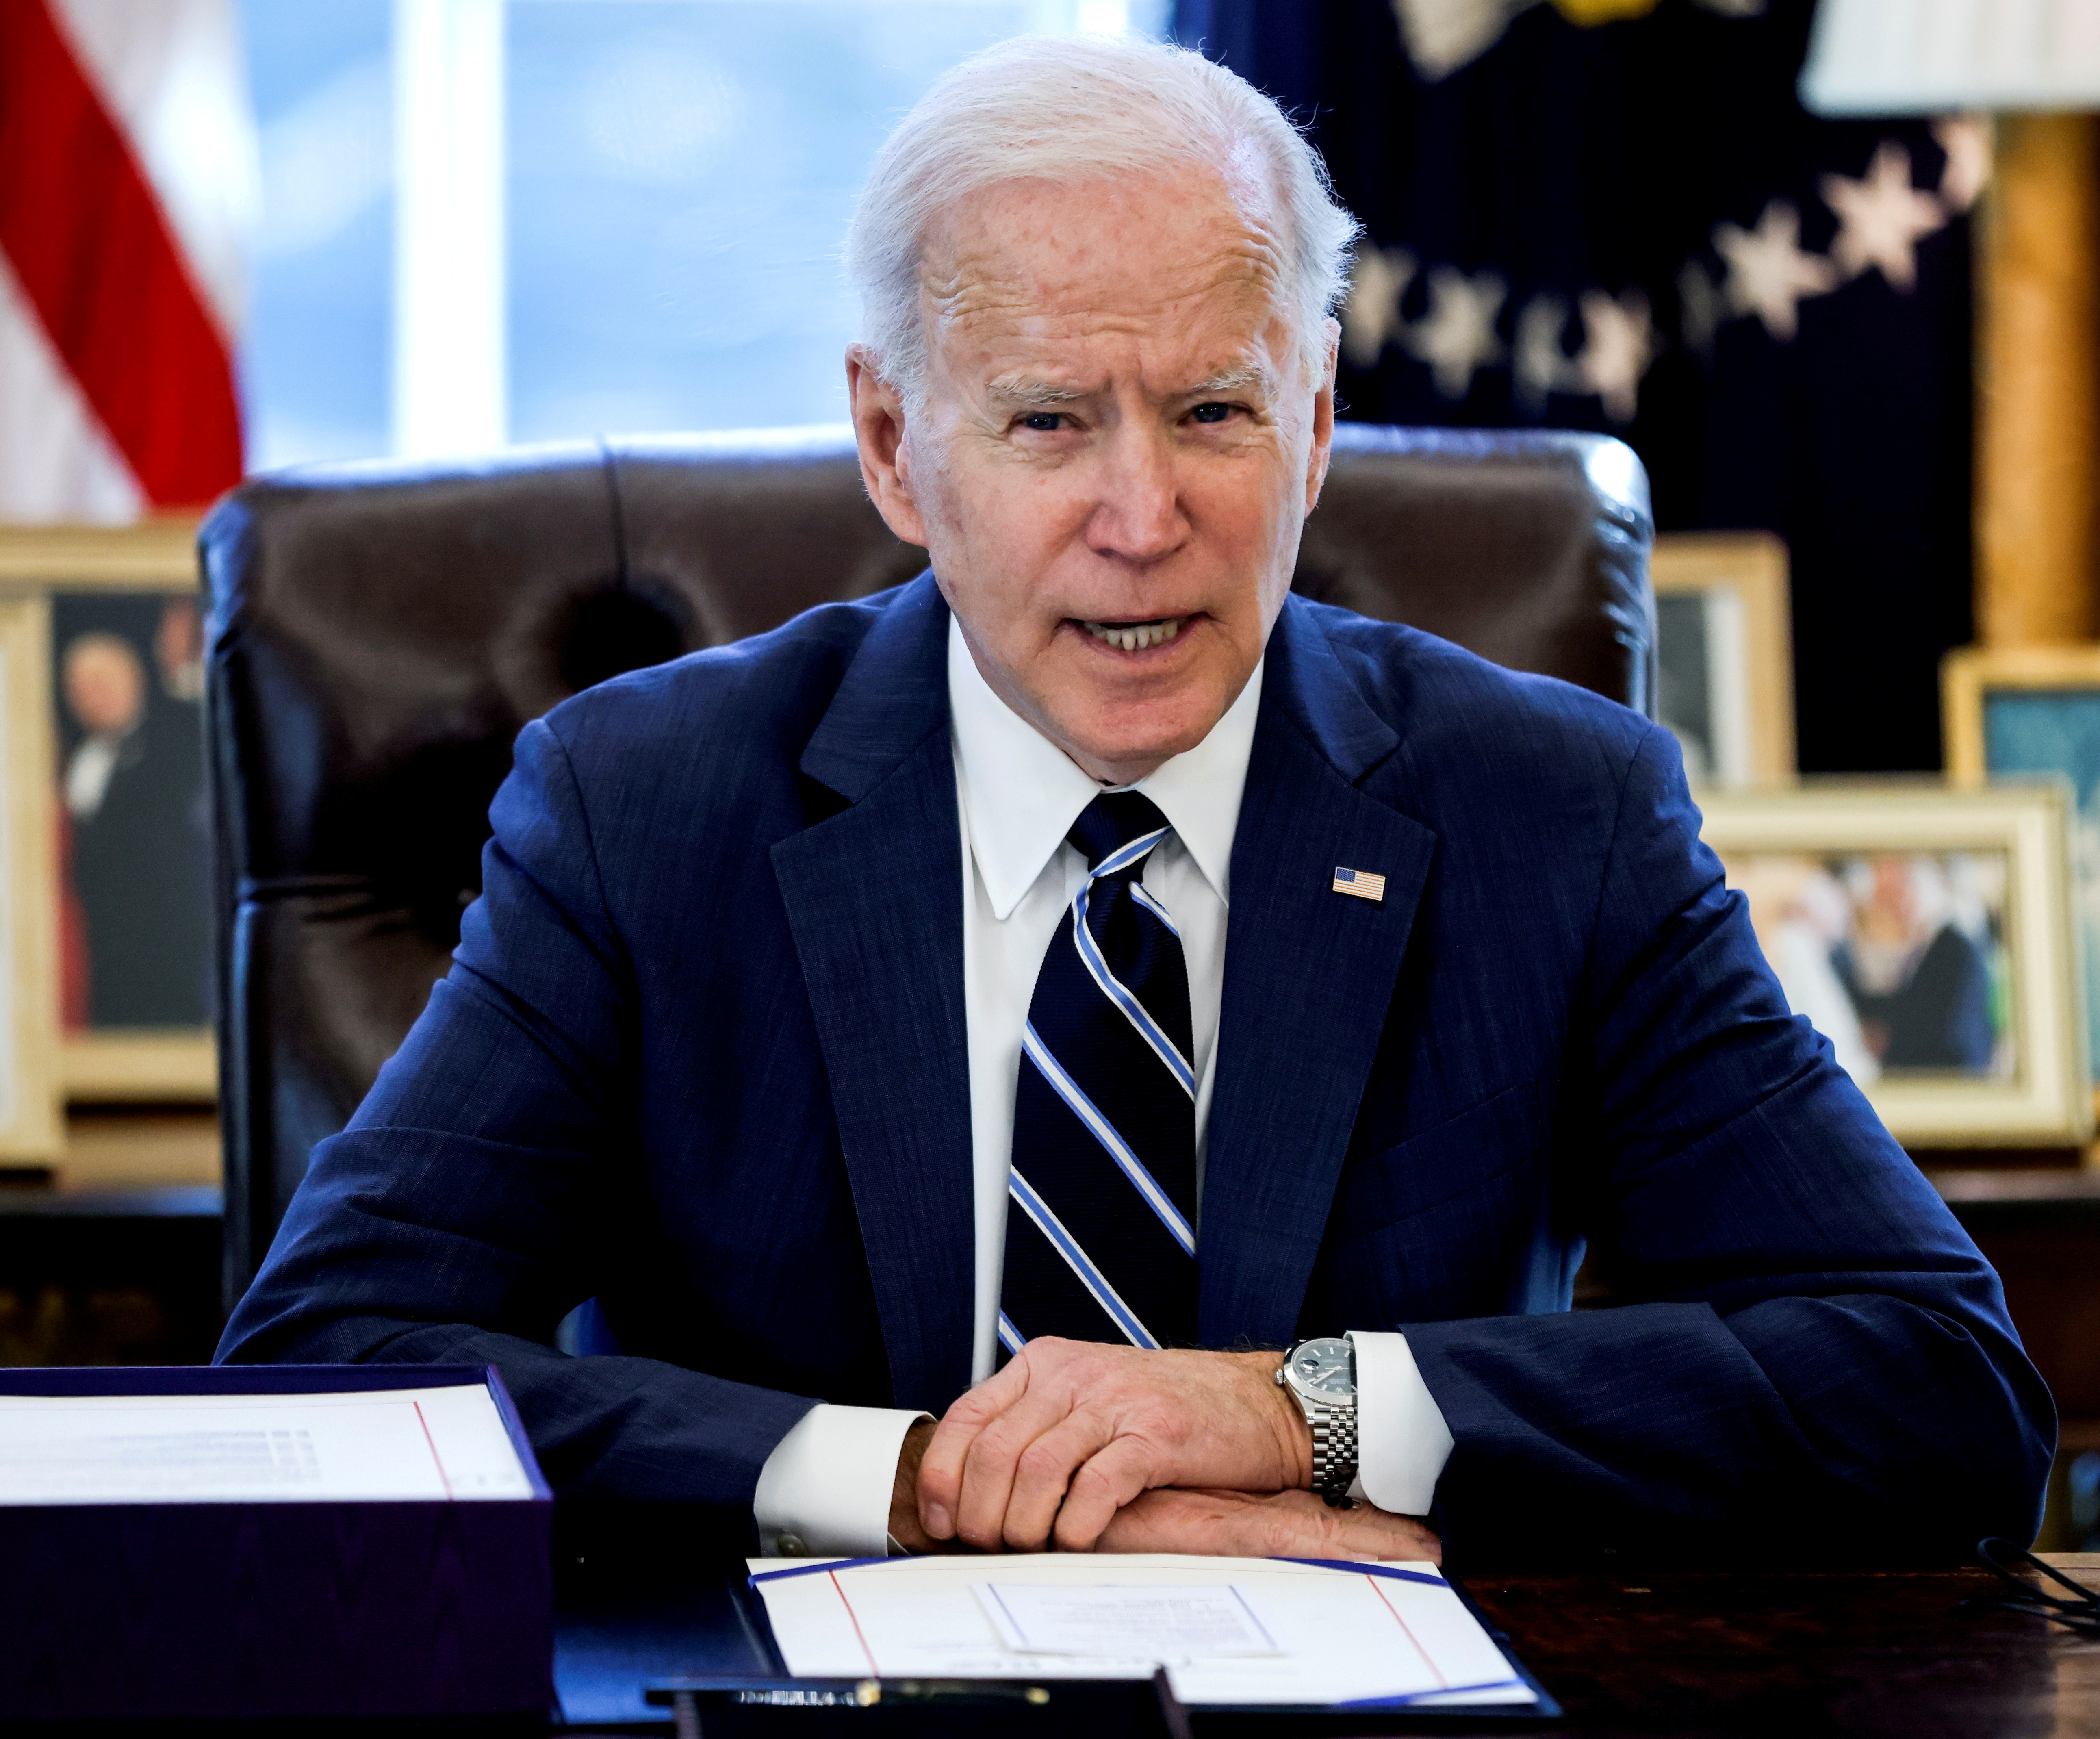 U.S. President Biden signs the American Rescue Plan in Washington